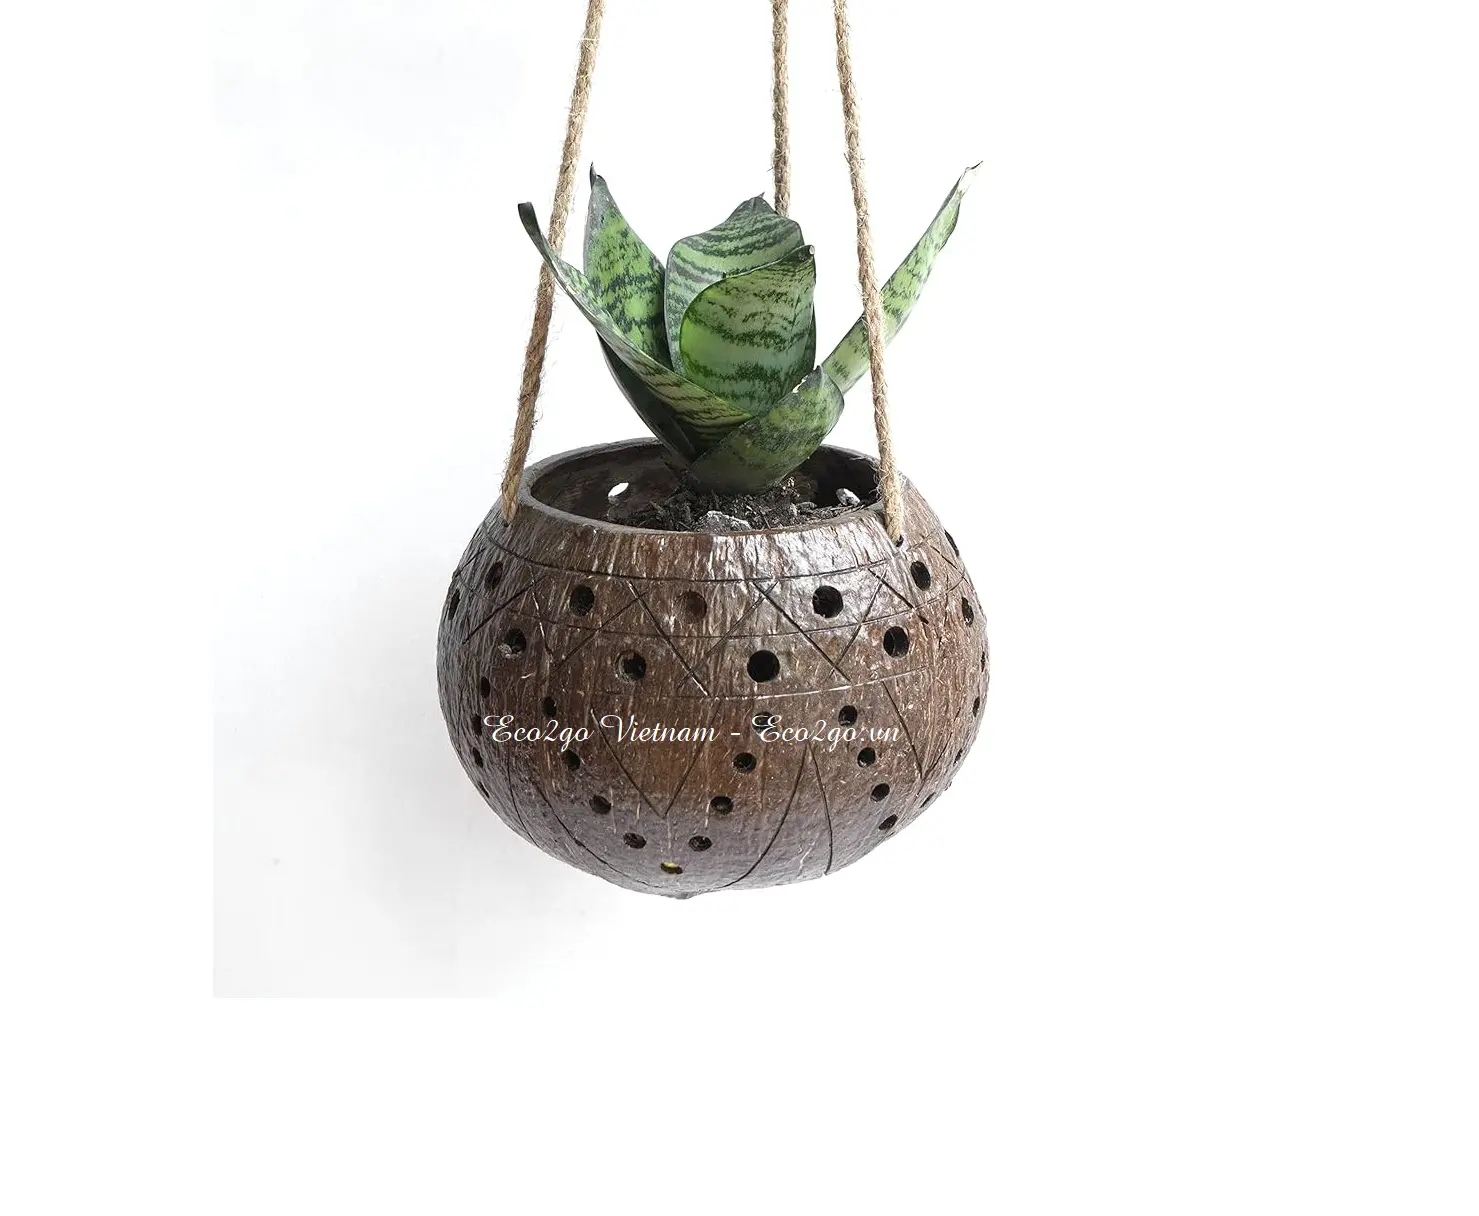 Dekoratif taman Anda dengan cangkang kelapa Pot gantung/Pot tanaman cangkang kelapa dengan tali gantung buatan Vietnam